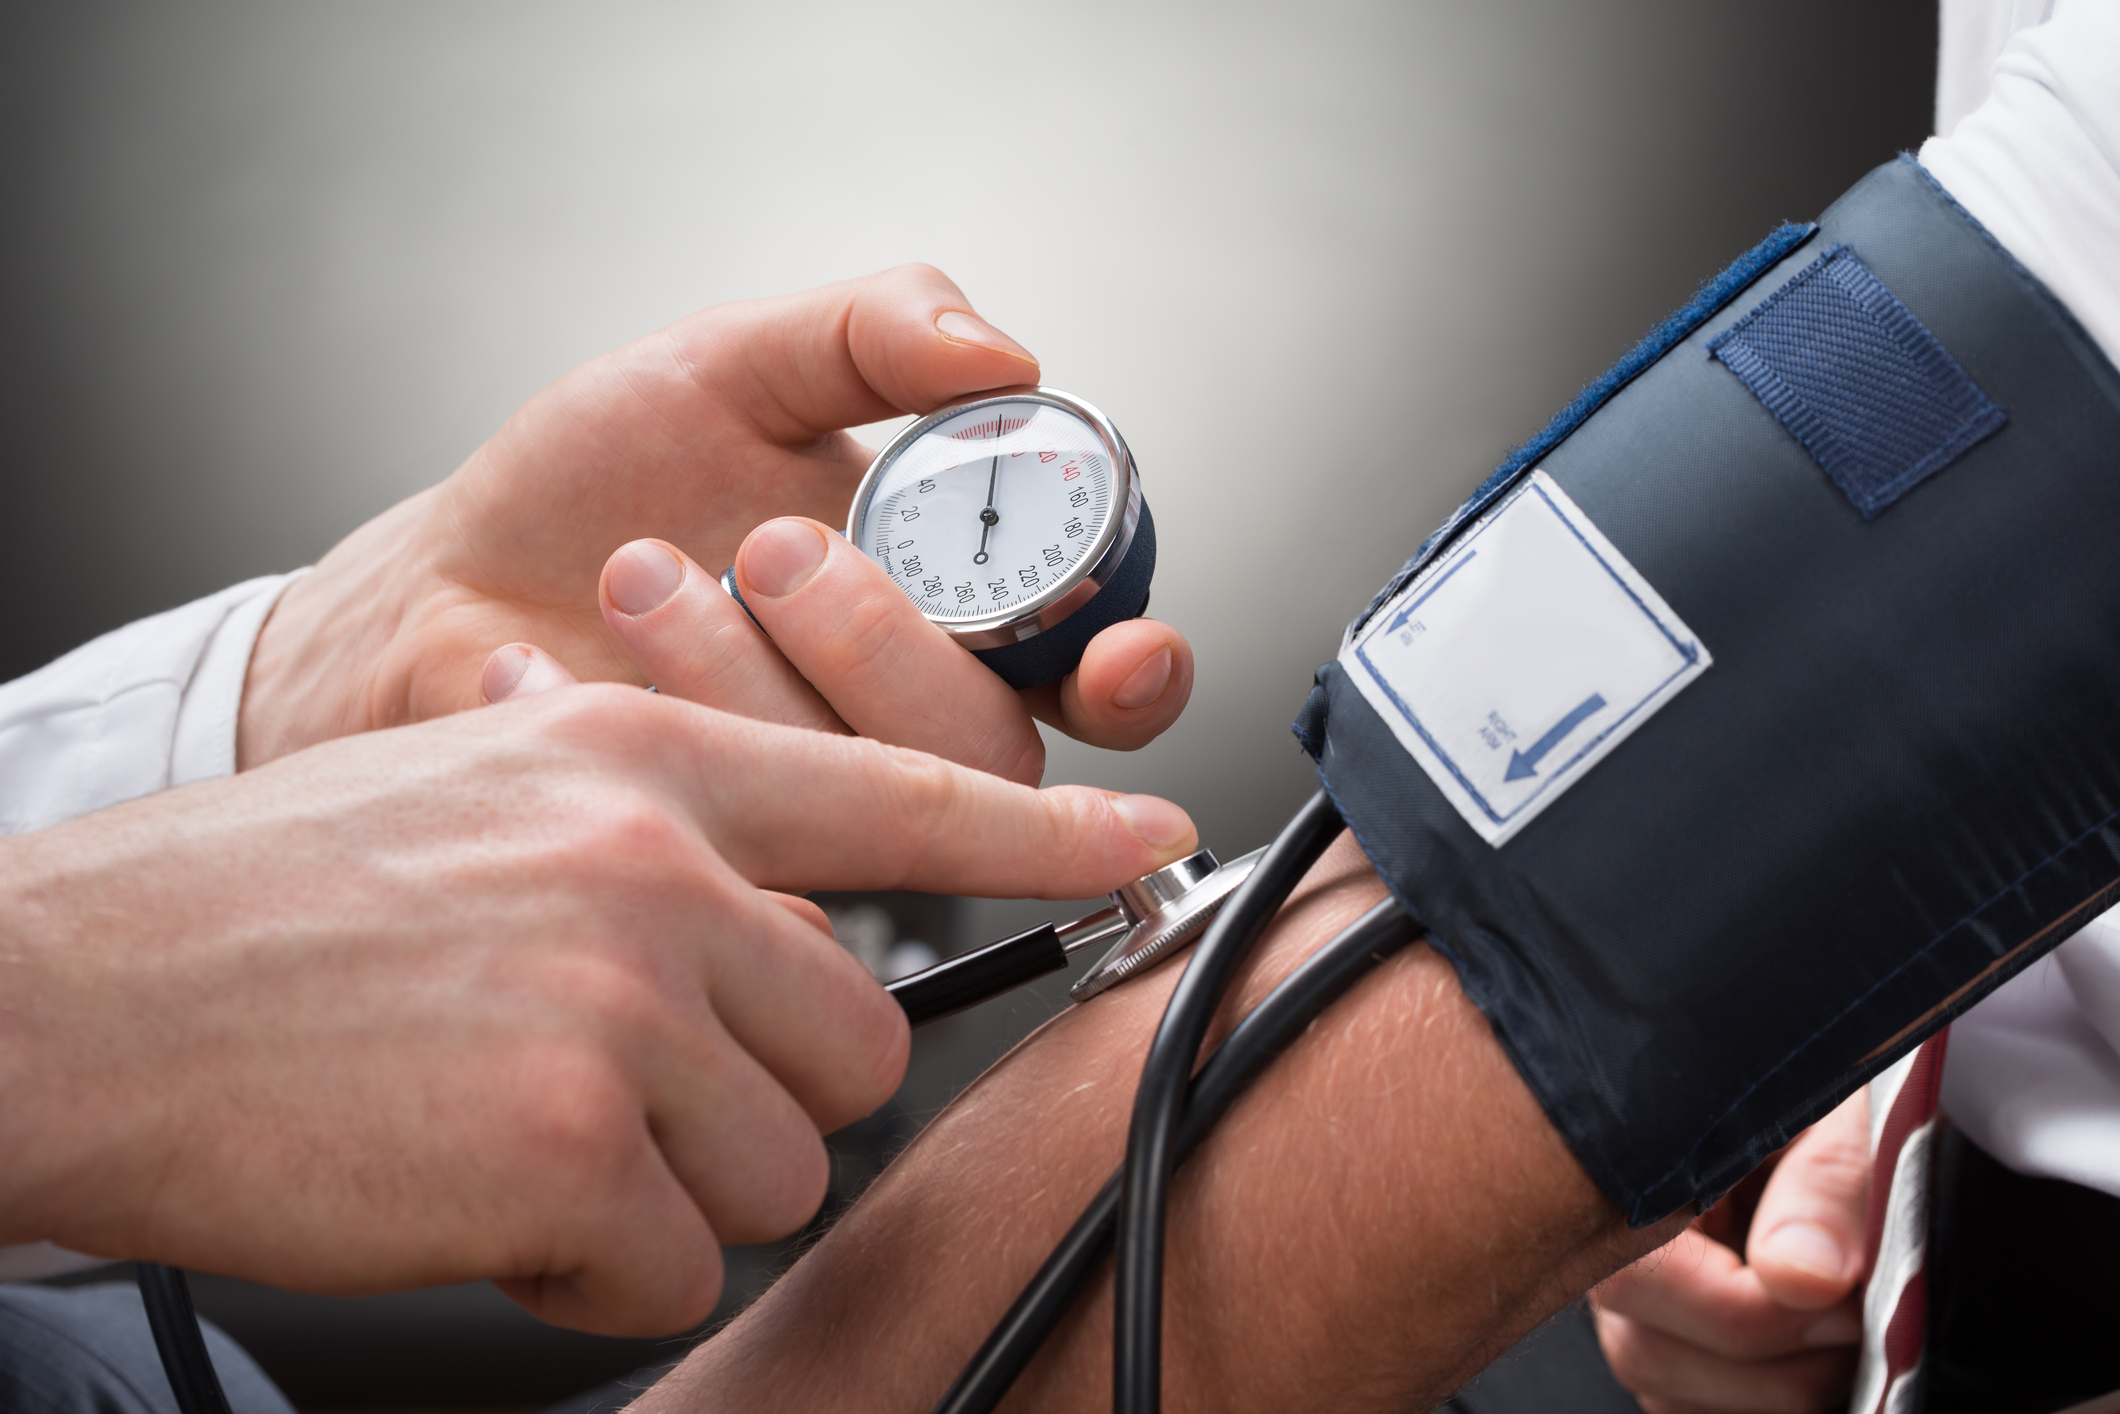 Hypertension: An international study shows the blood pressure benefit of endovascular renal denervation focused ultrasound in patients receiving no antihypertensive drug